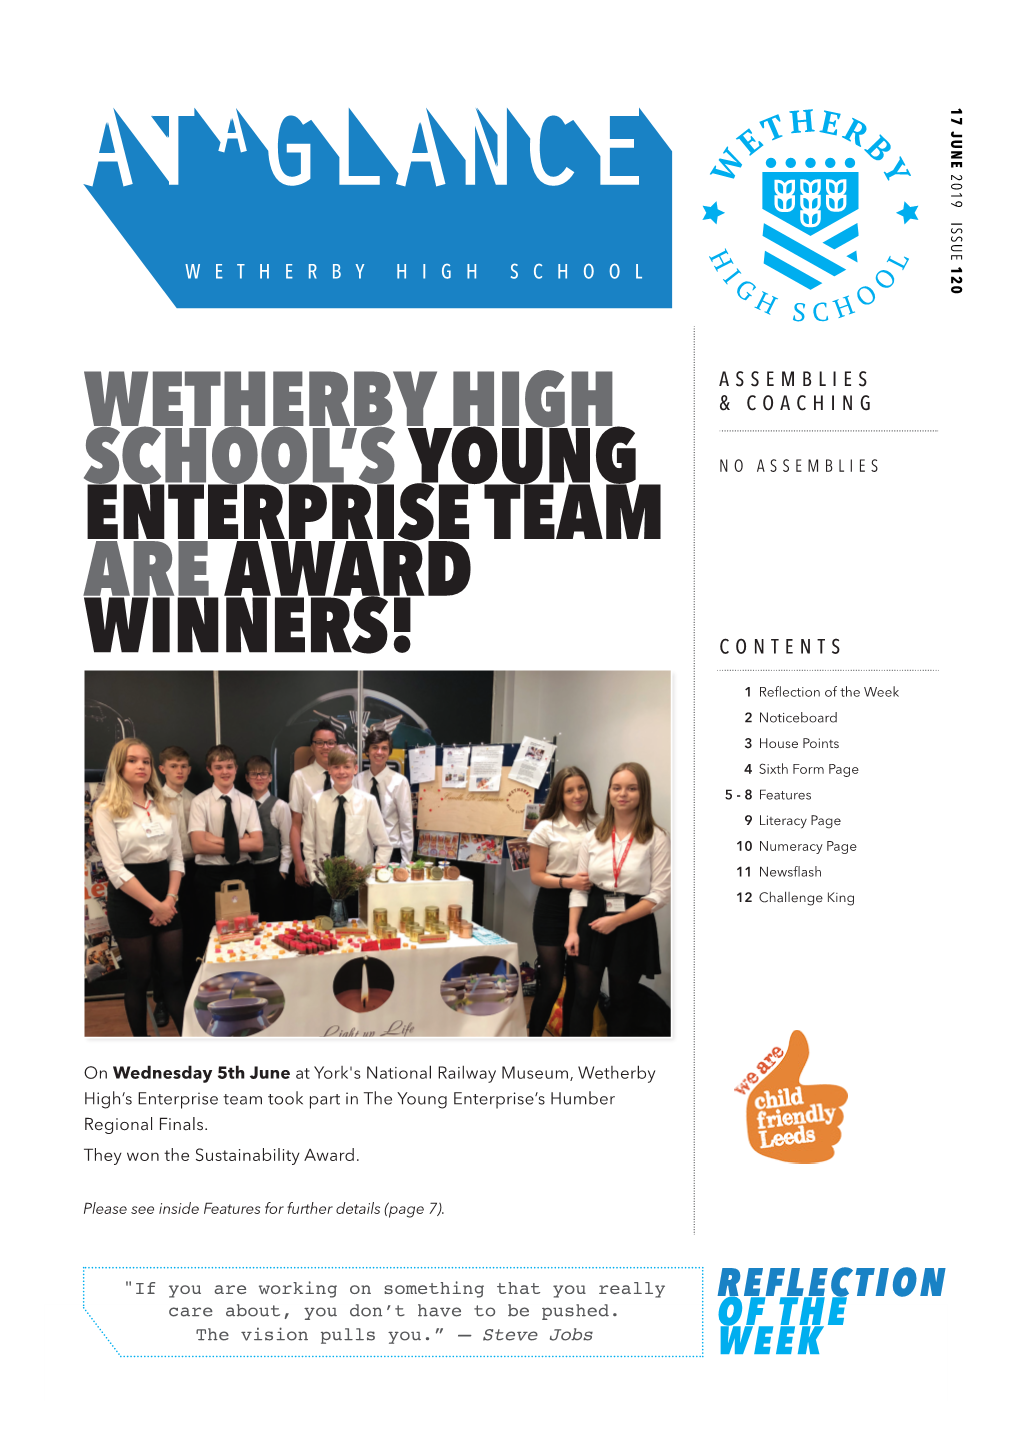 Wetherby High School's Young Enterprise Team Areaward Winners!